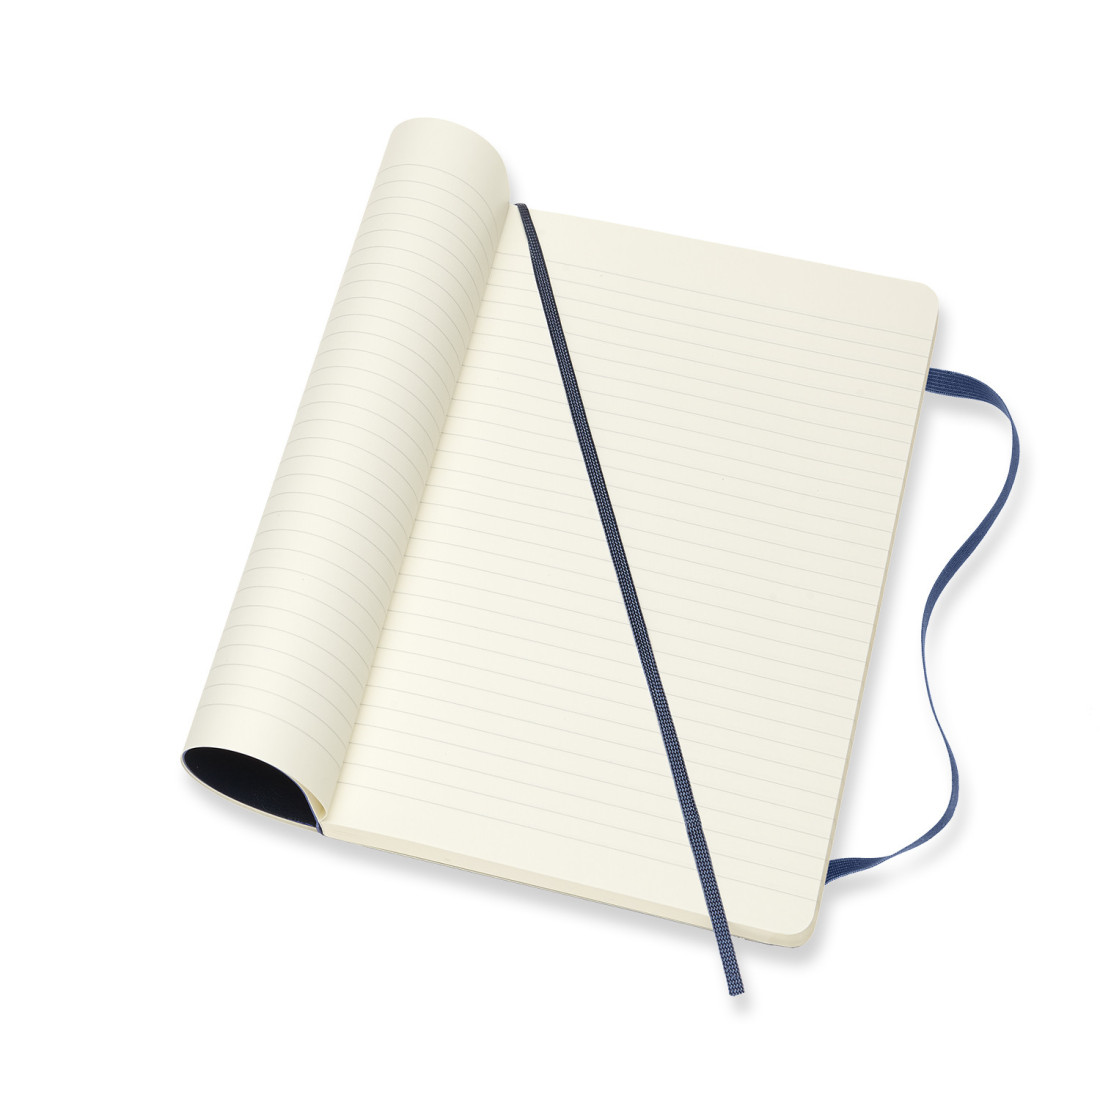 Moleskine Notebook Large 13x21 Ruled  Blue Soft  Cover